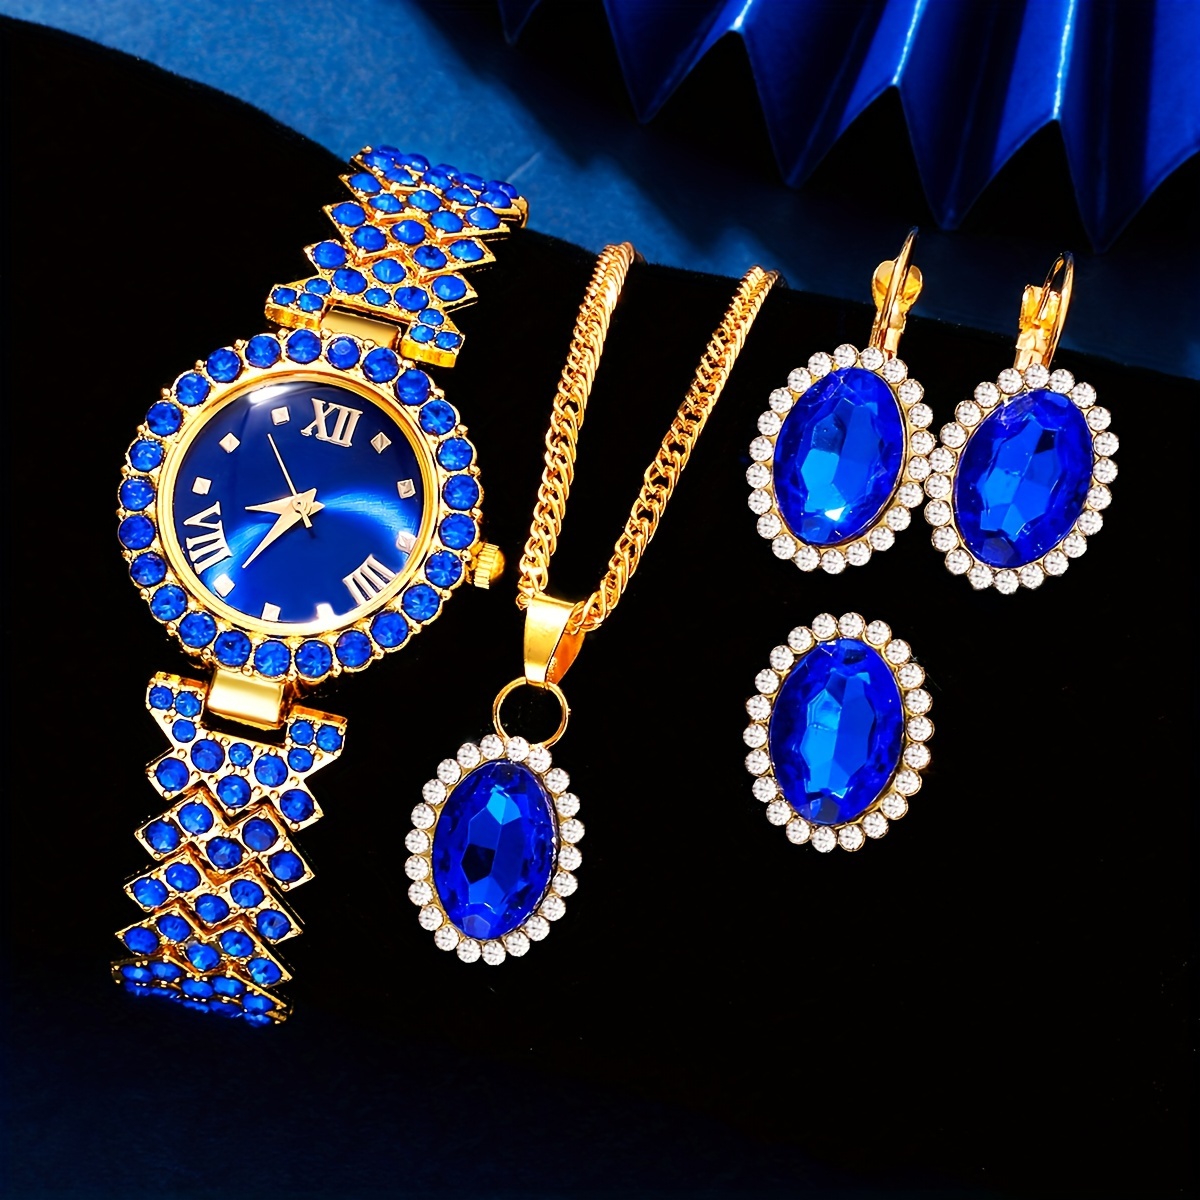 

5pcs/set Women's Luxury Rhinestone Quartz Watch Elegant Fashion Analog Wrist Watch & Synthetic Gem Jewelry Set, Gift For Mom Her